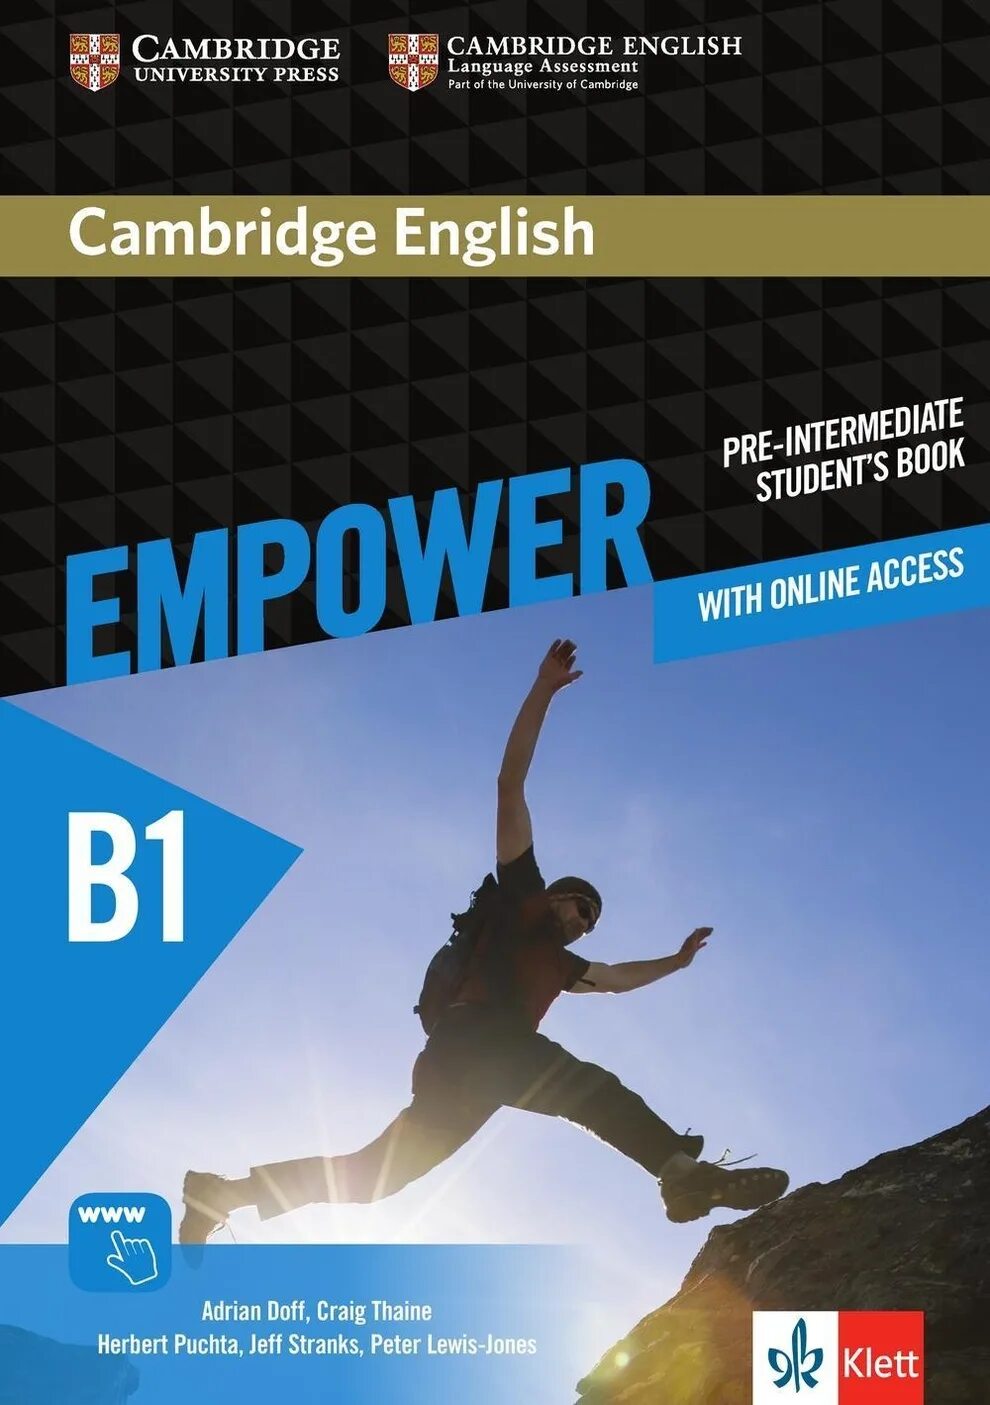 Cambridge english first. Cambridge b1+ student's book. Cambridge students book b1. B1 Cambridge book. Cambridge English empower b1+.